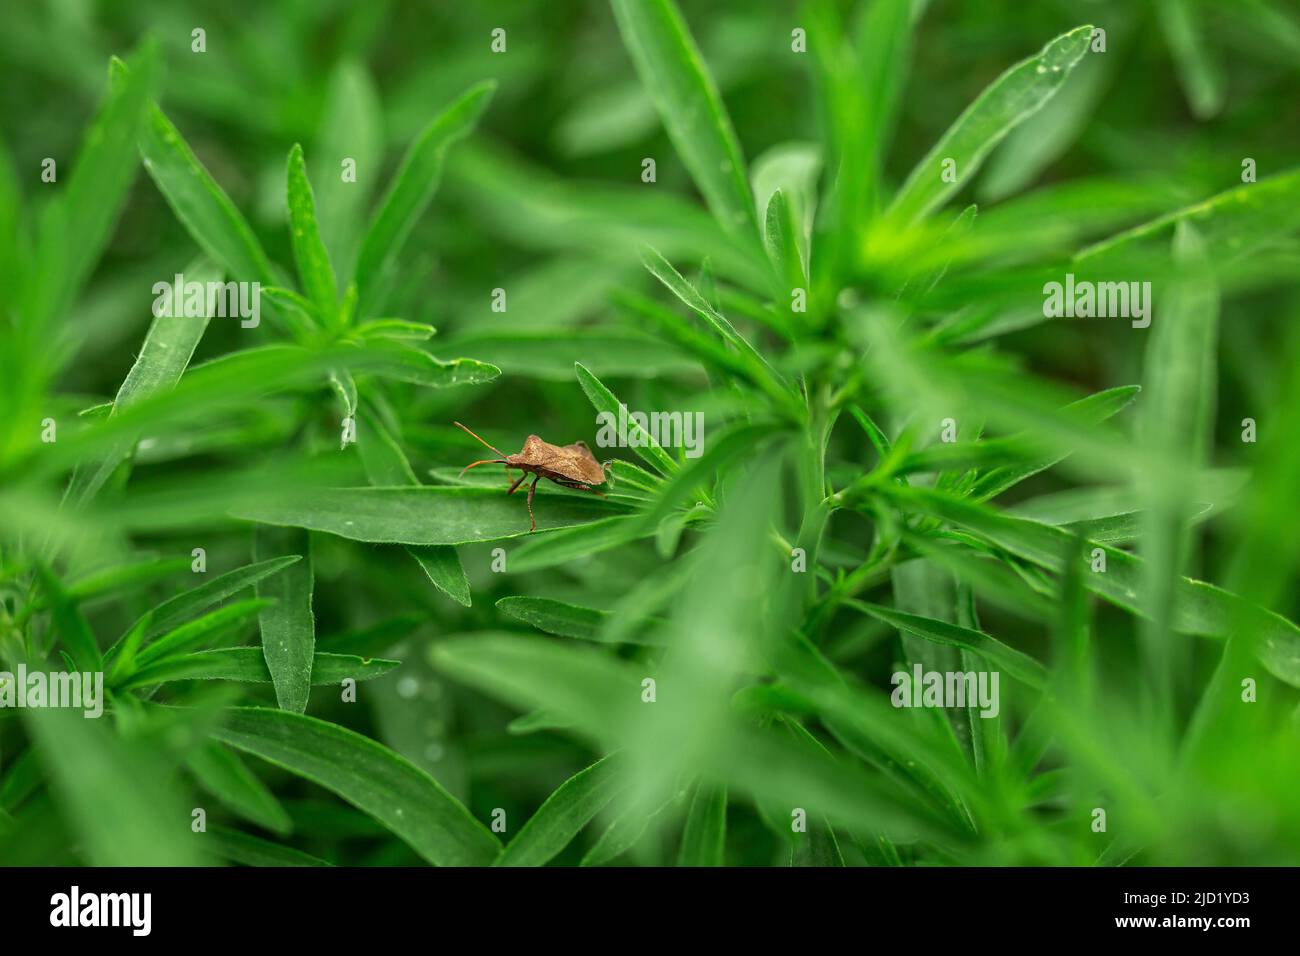 A stinkbug beetle bug sits on grass leaves Stock Photo